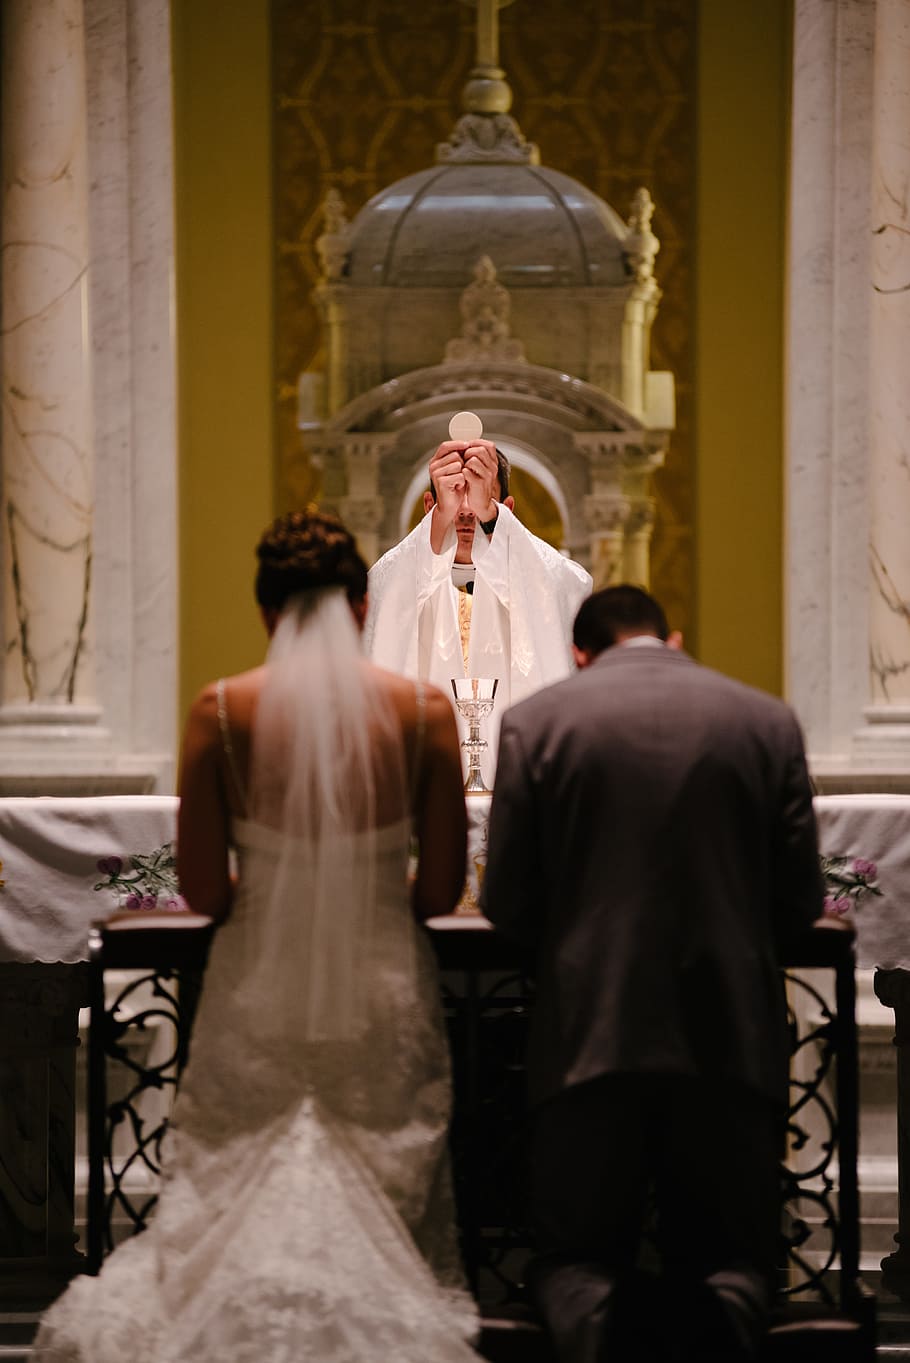 wedding, mass, priest, bride, groom, gown, suit, altar, hostia, ceremony